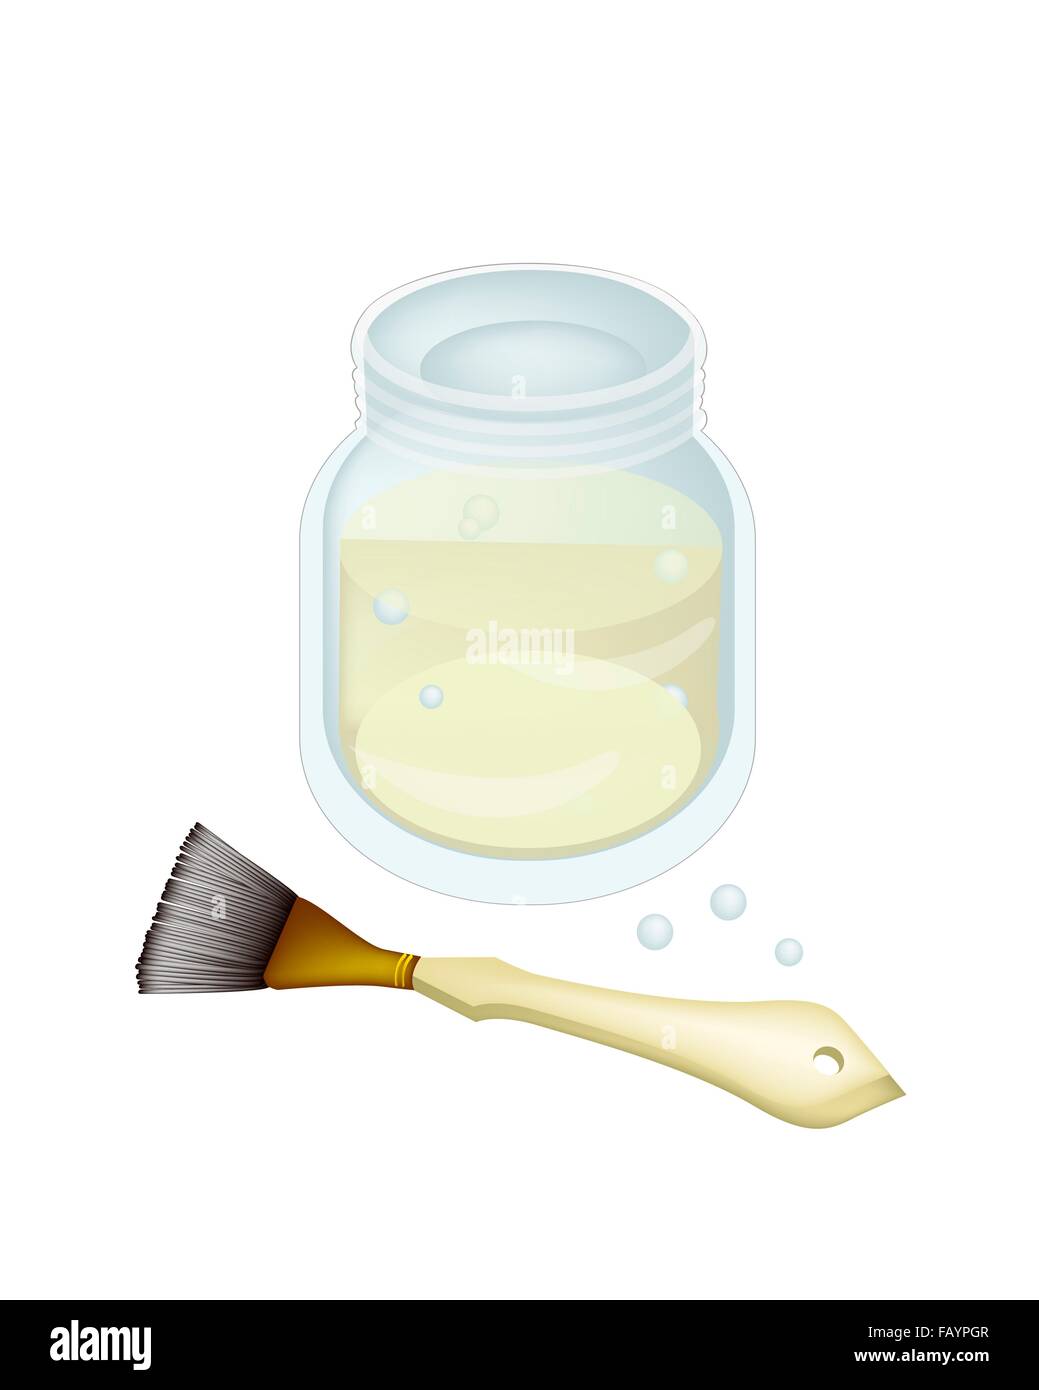 Trementina o aceite de linaza en un frasco de vidrio con una embarcación brochas o pinceles de artista, para mezclar con aceite Paint para dibujar y pintar Foto de stock